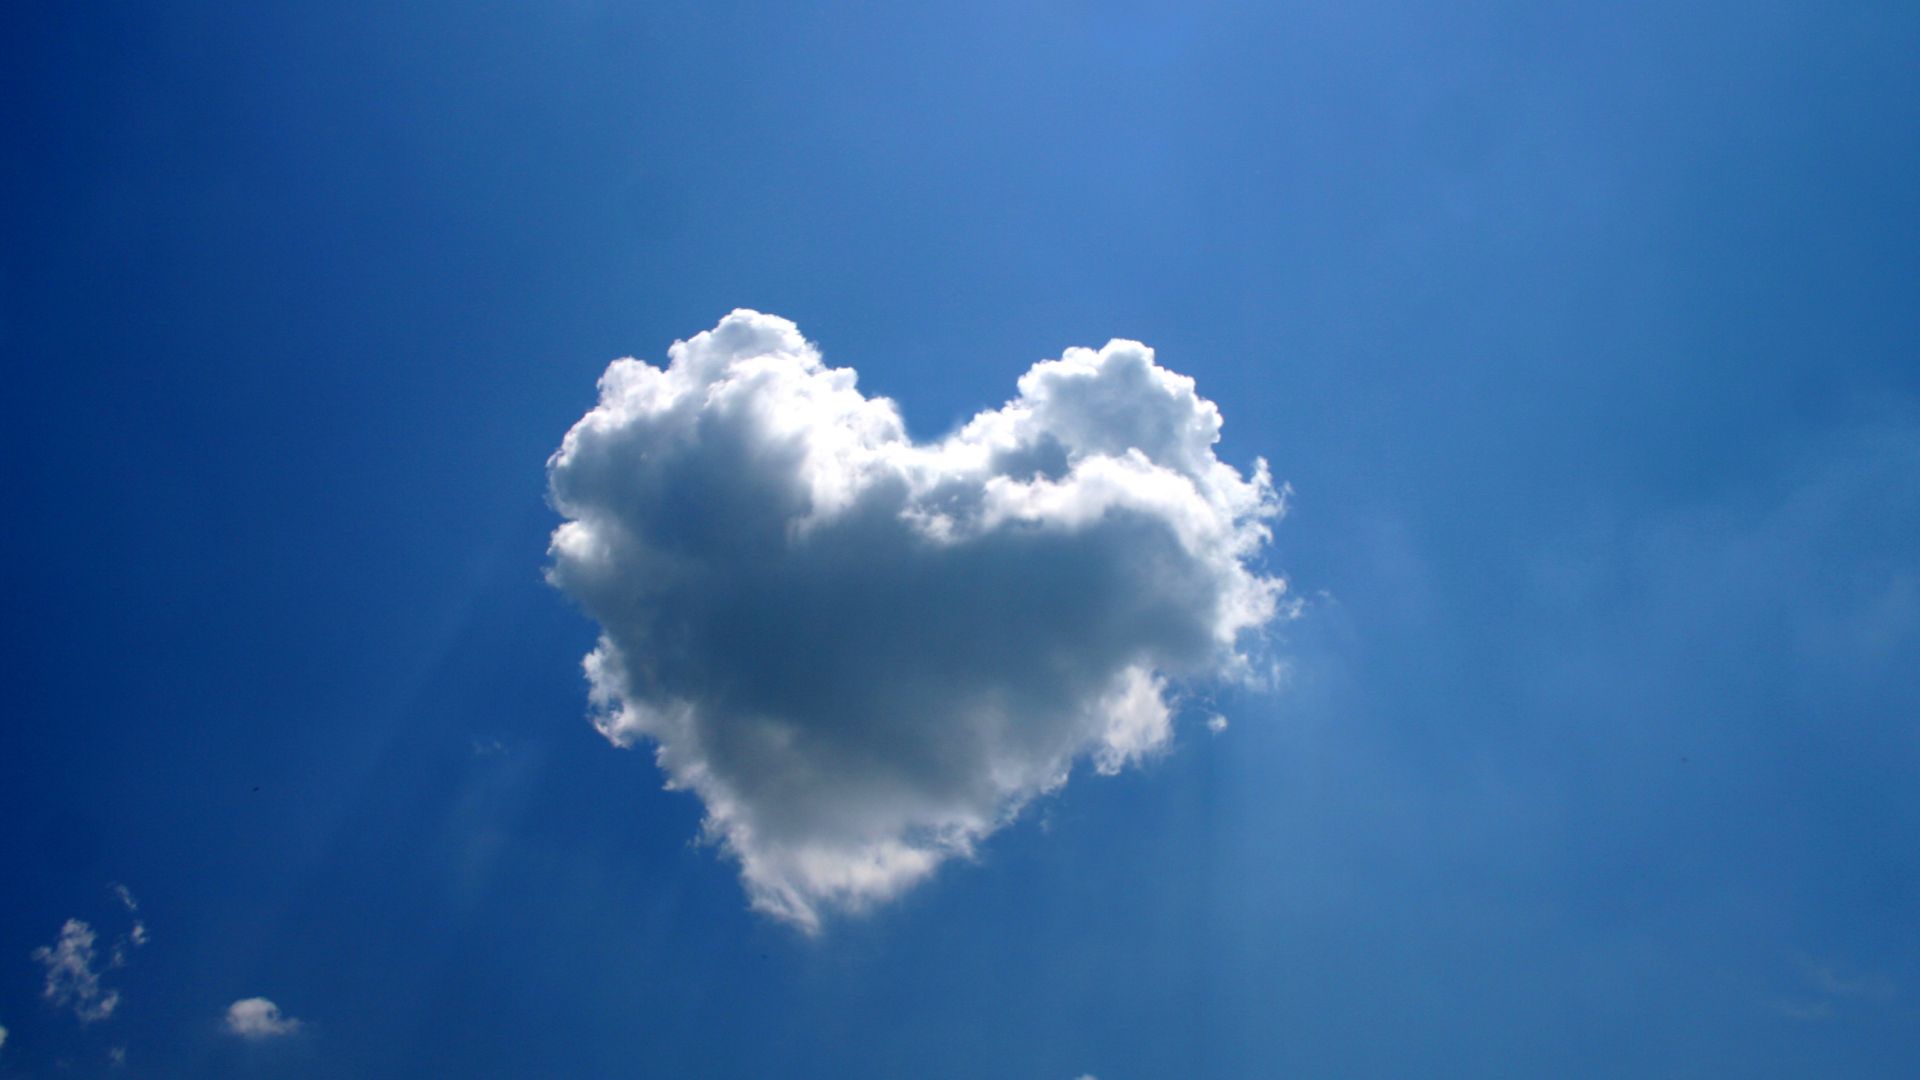 фото любовь, сердце, love image, heart, clouds, 4k (horizontal)